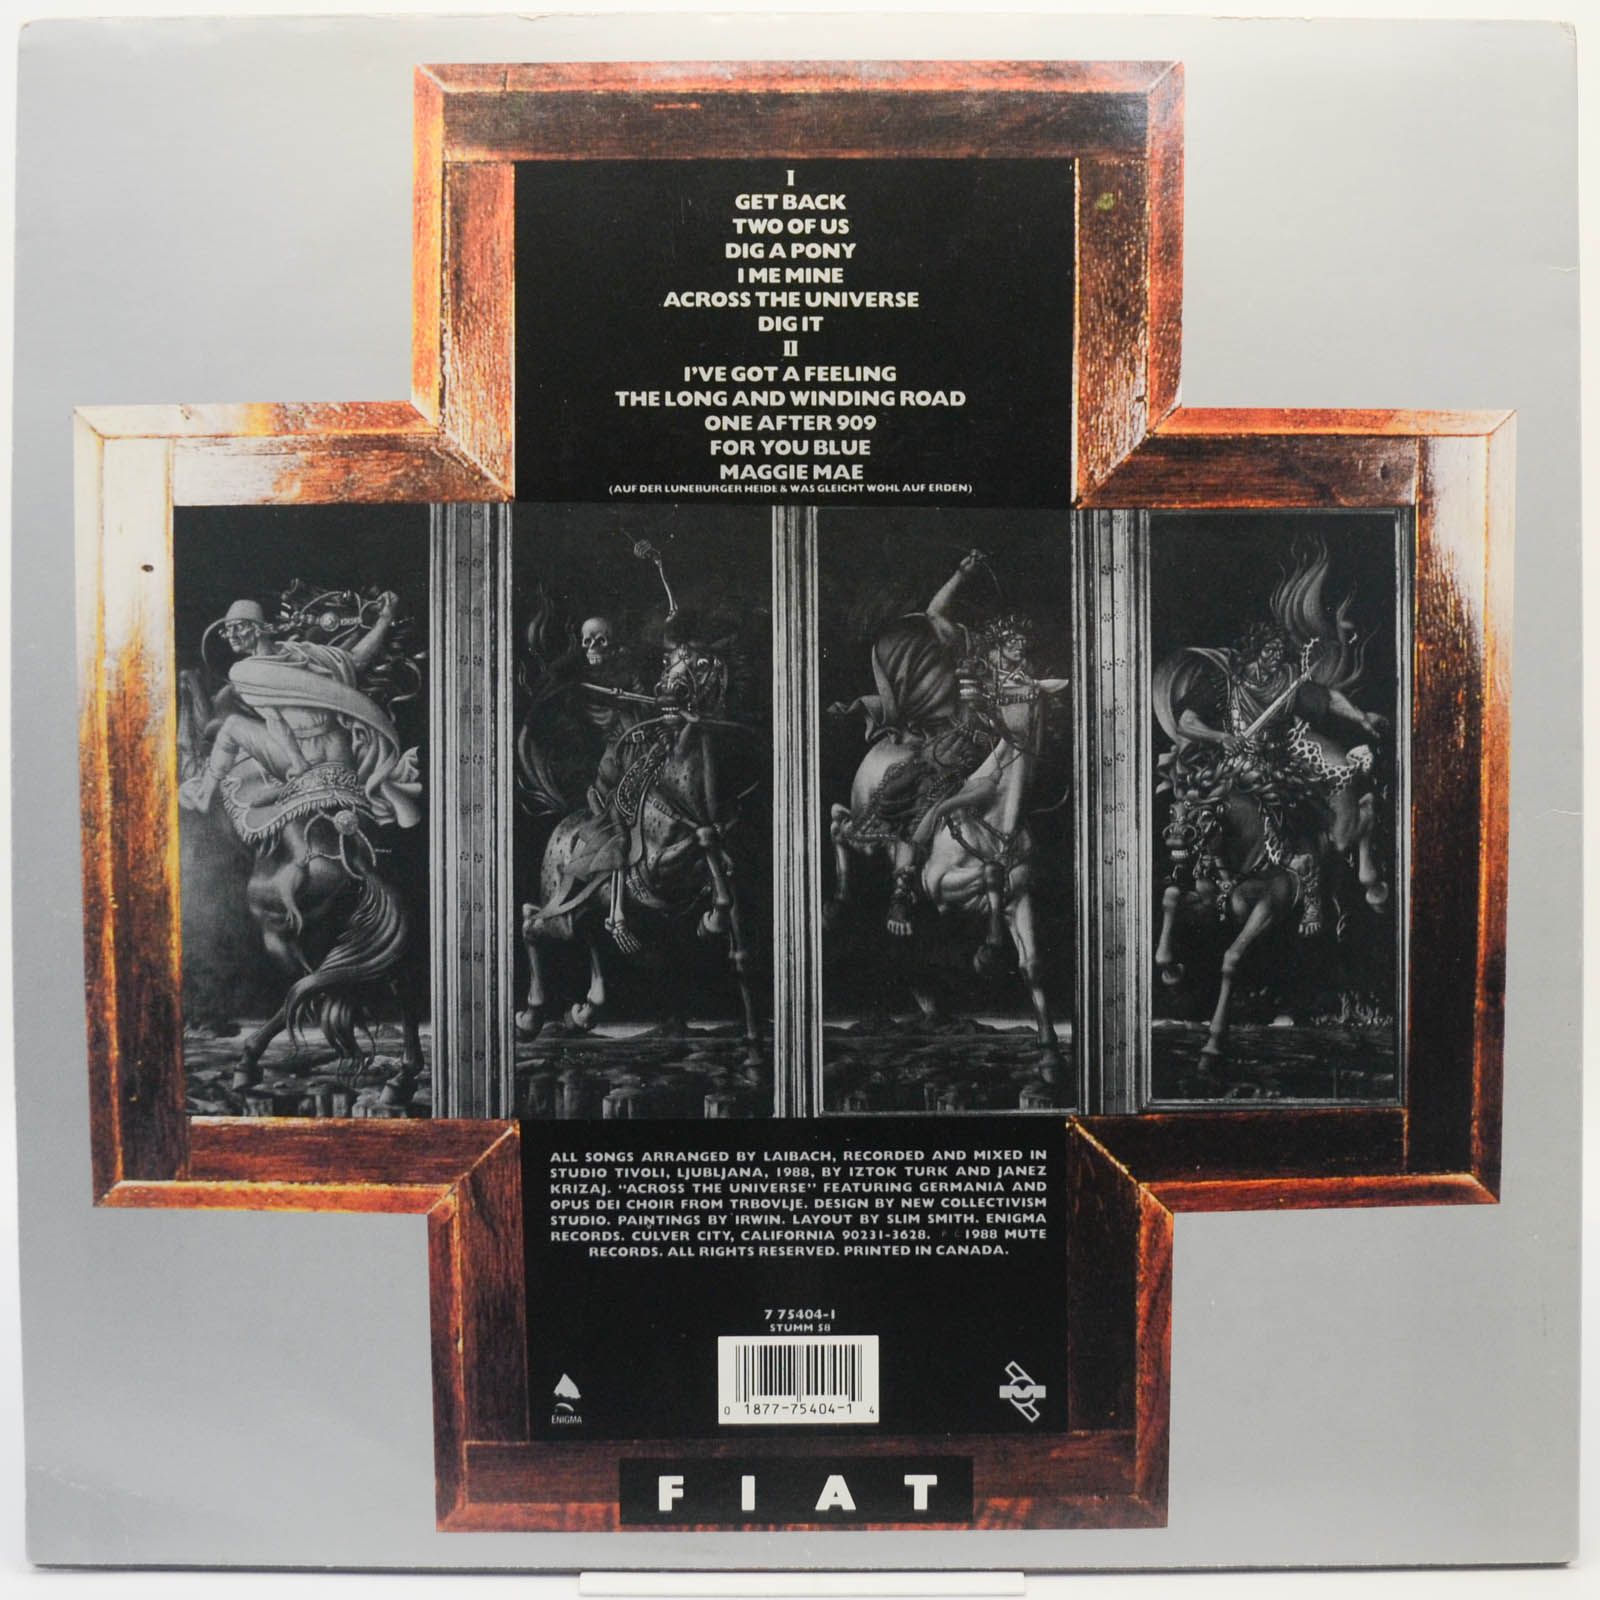 Laibach — Let It Be (USA), 1988